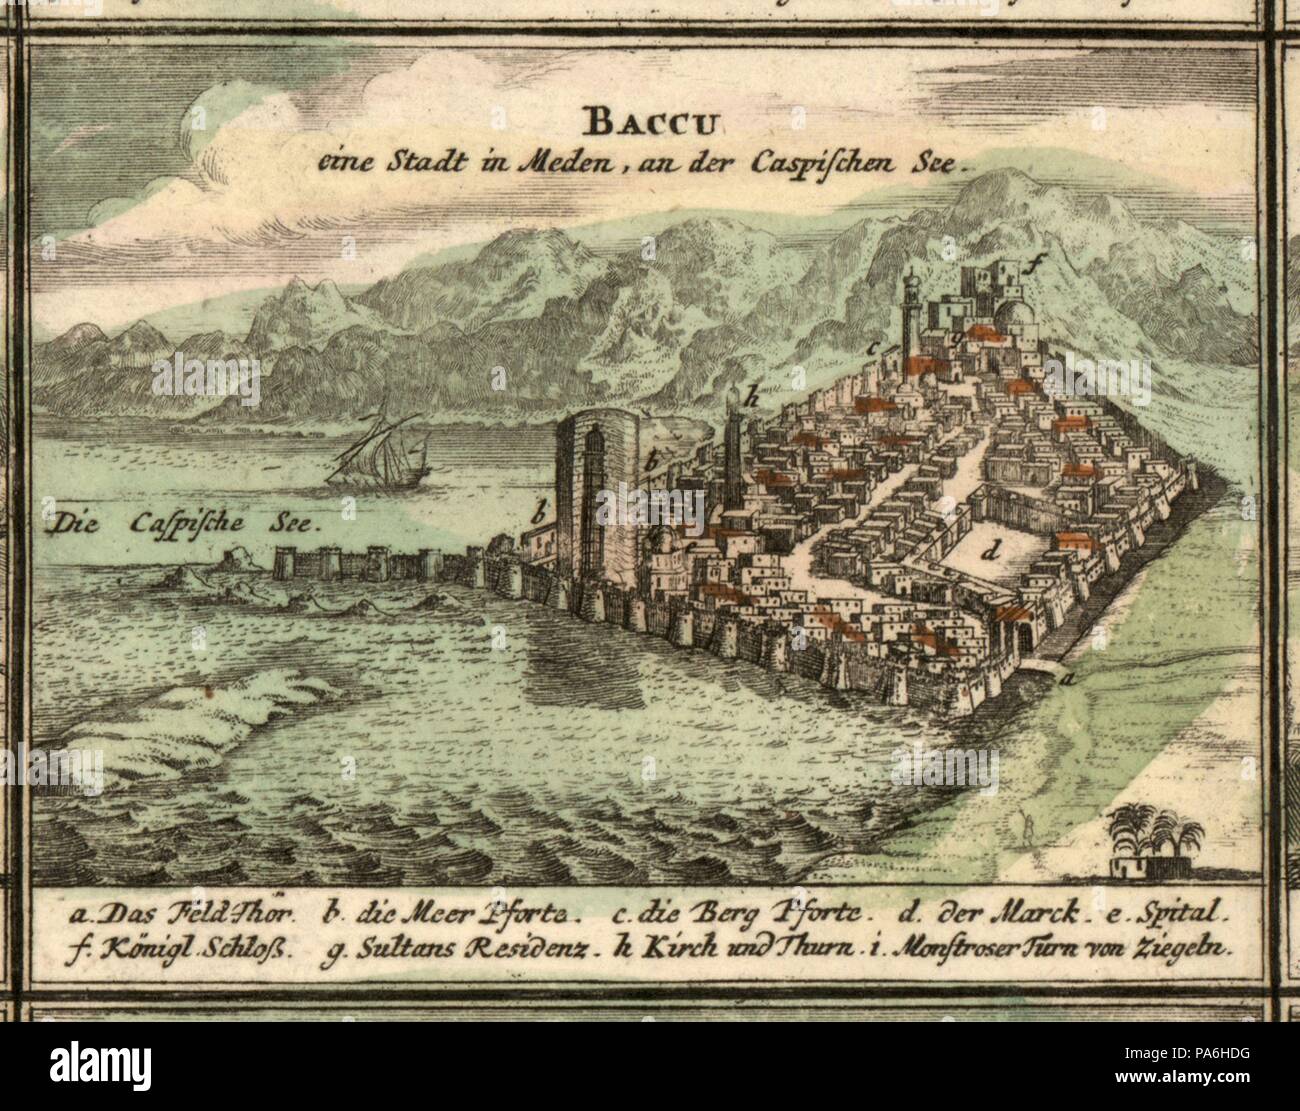 Karte von Baku. Museum: universiteitsbibliotheek Leiden. Stockfoto